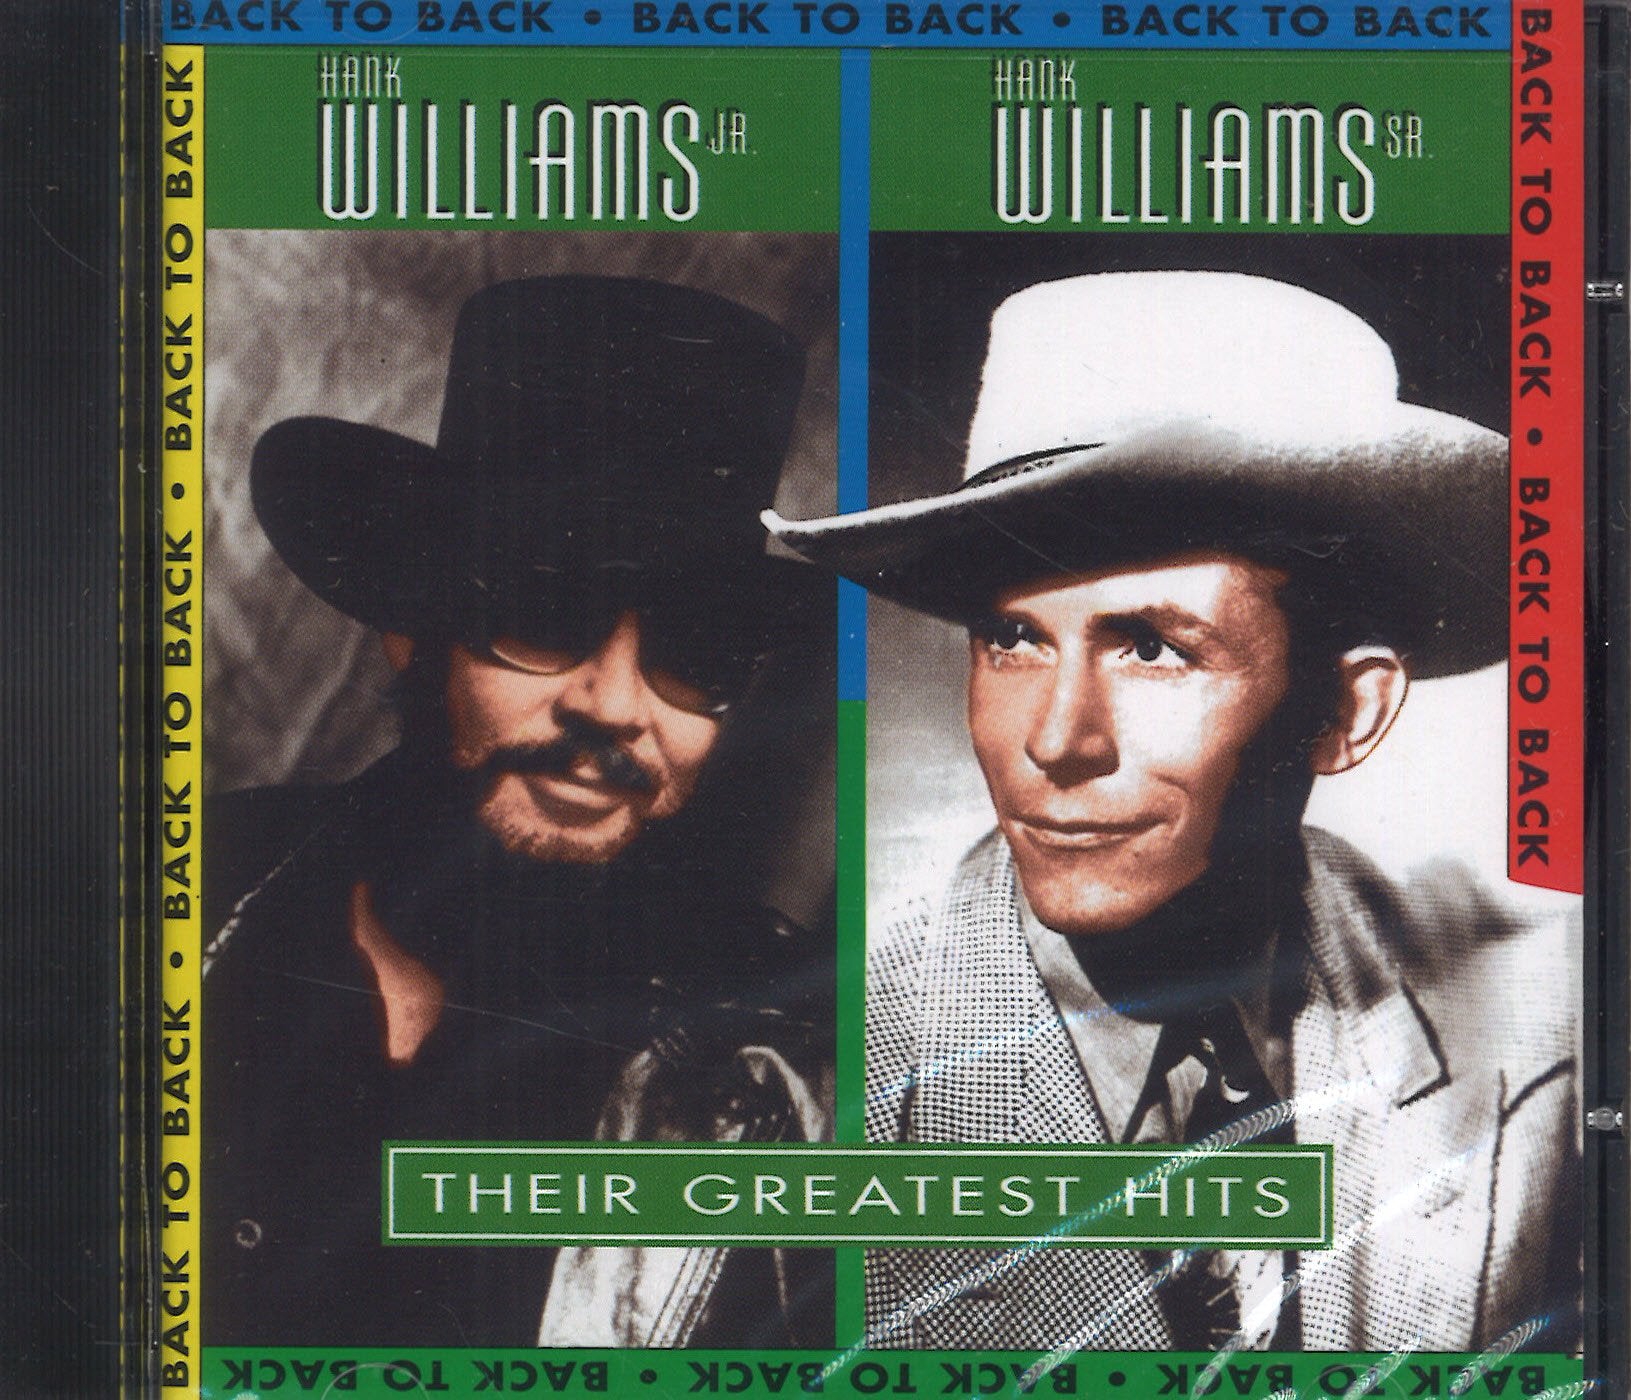 Hank Williams Sr. & Hank Williams Jr. Their Greatest Hits